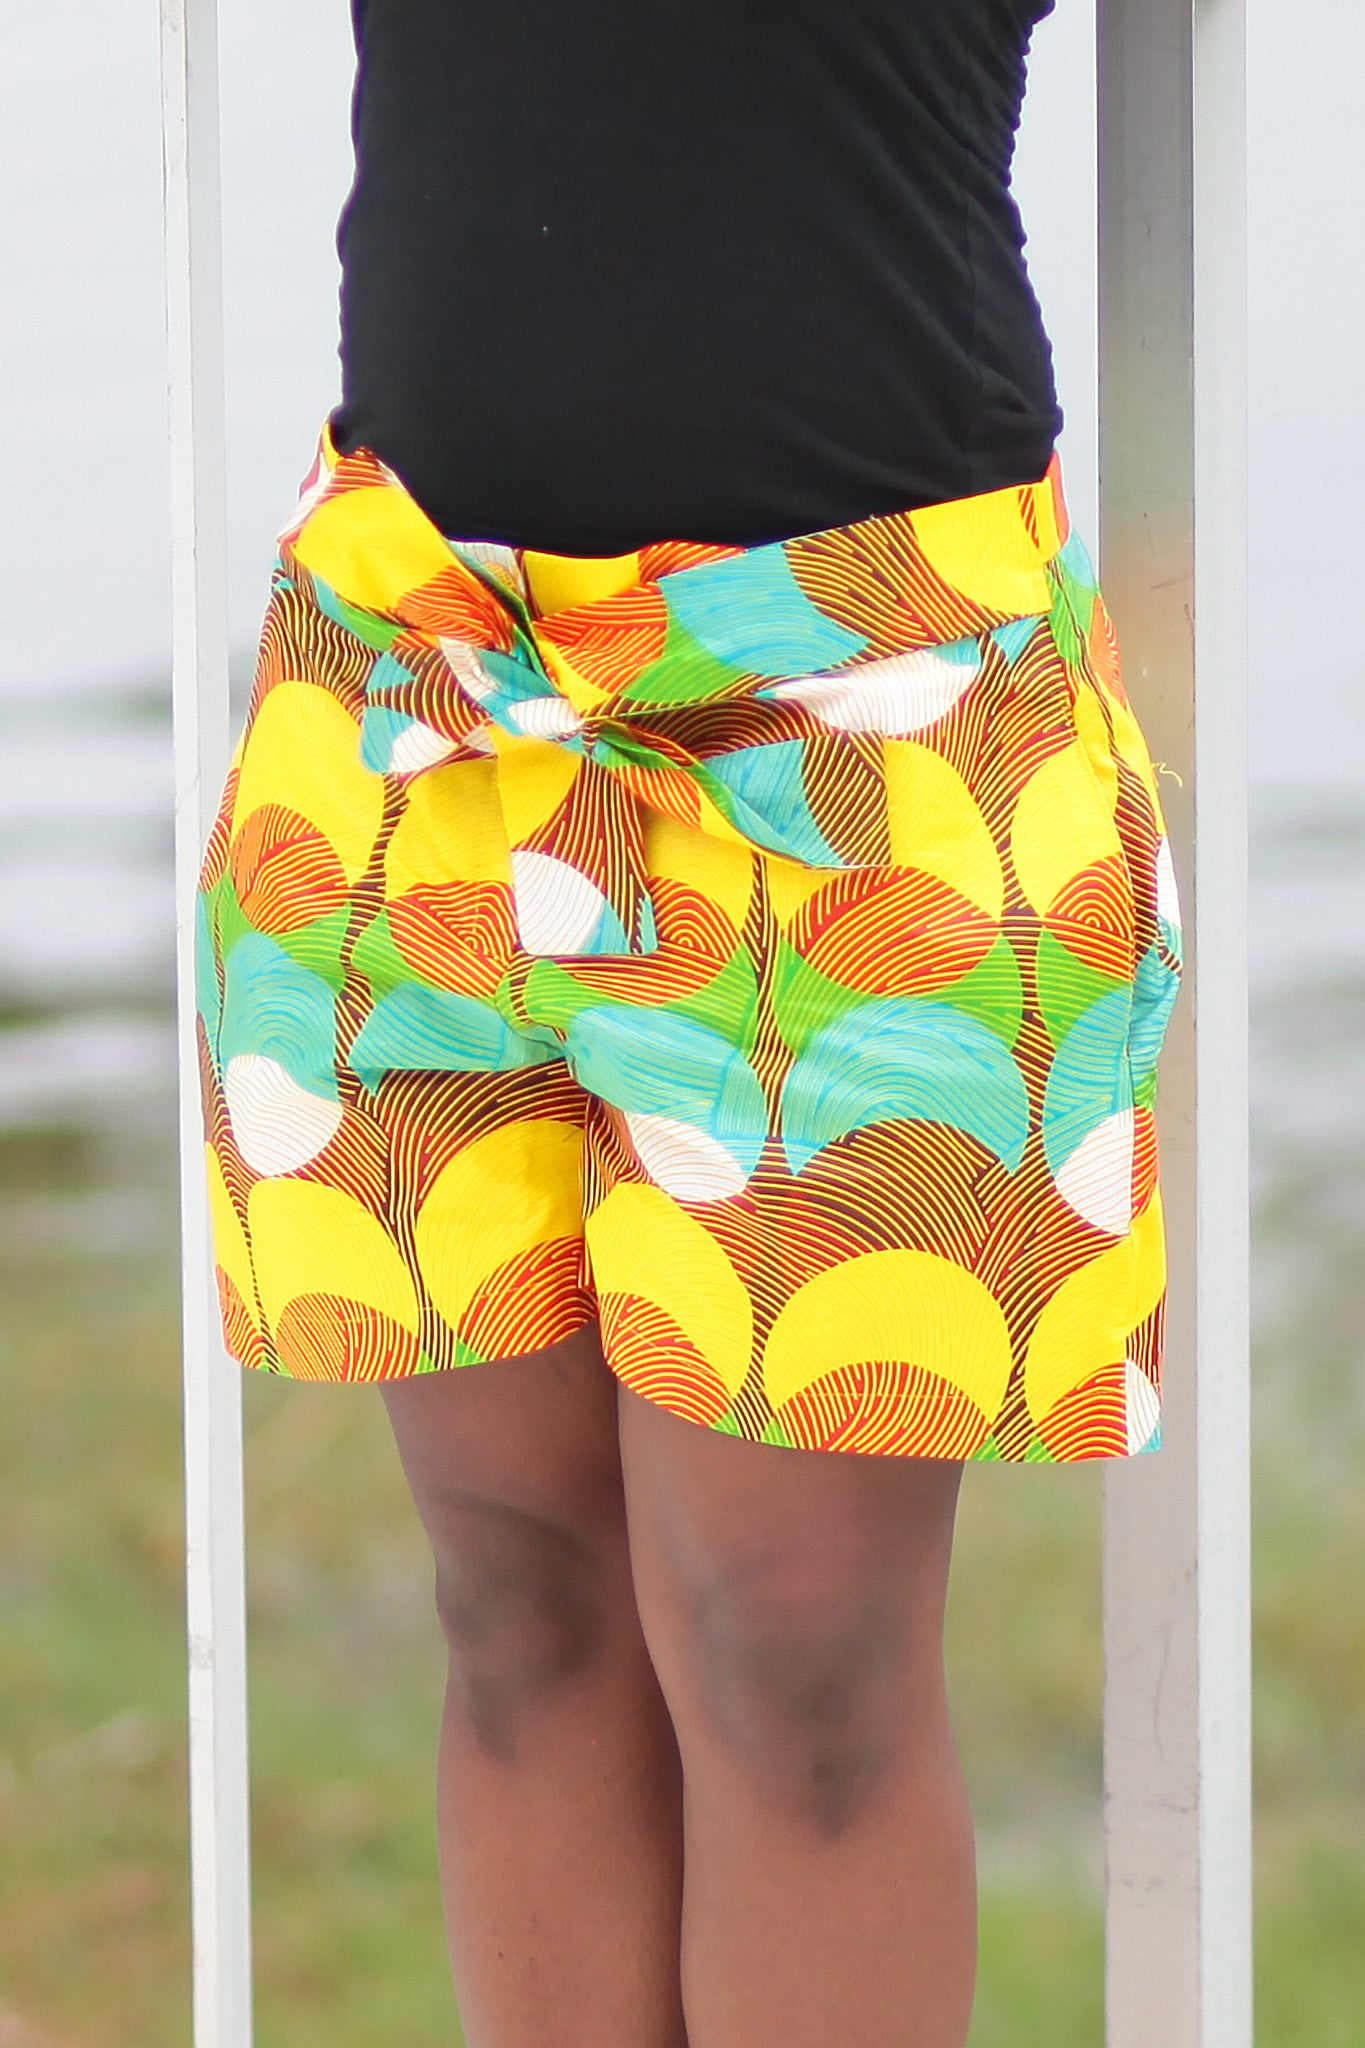 African Print/Kitenge  Beach Shorts-Duo Prints(Yellow/Teal/Orange Print) - Africas Closet